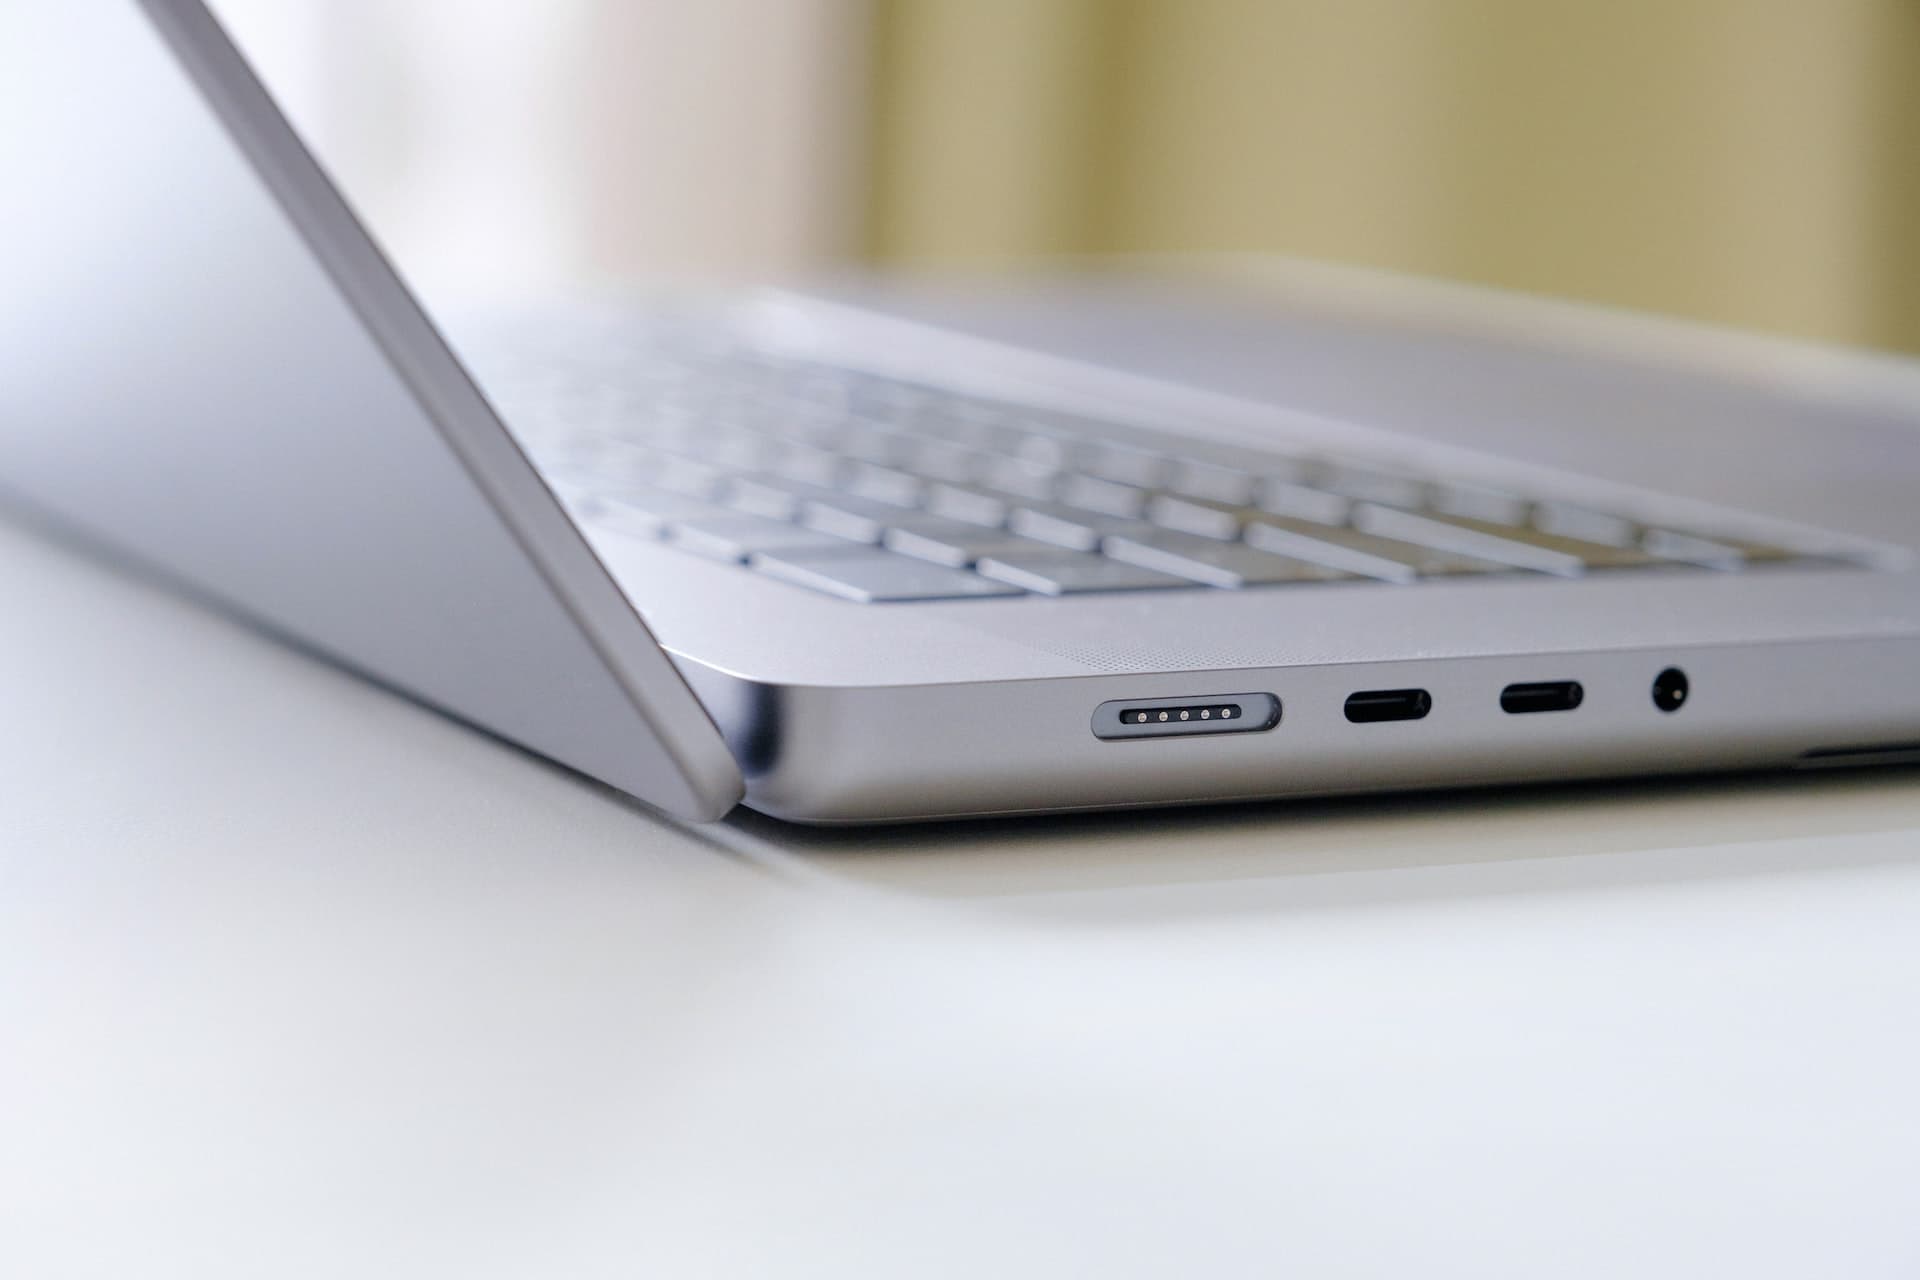 MacBook Pro showing its USB-C ports